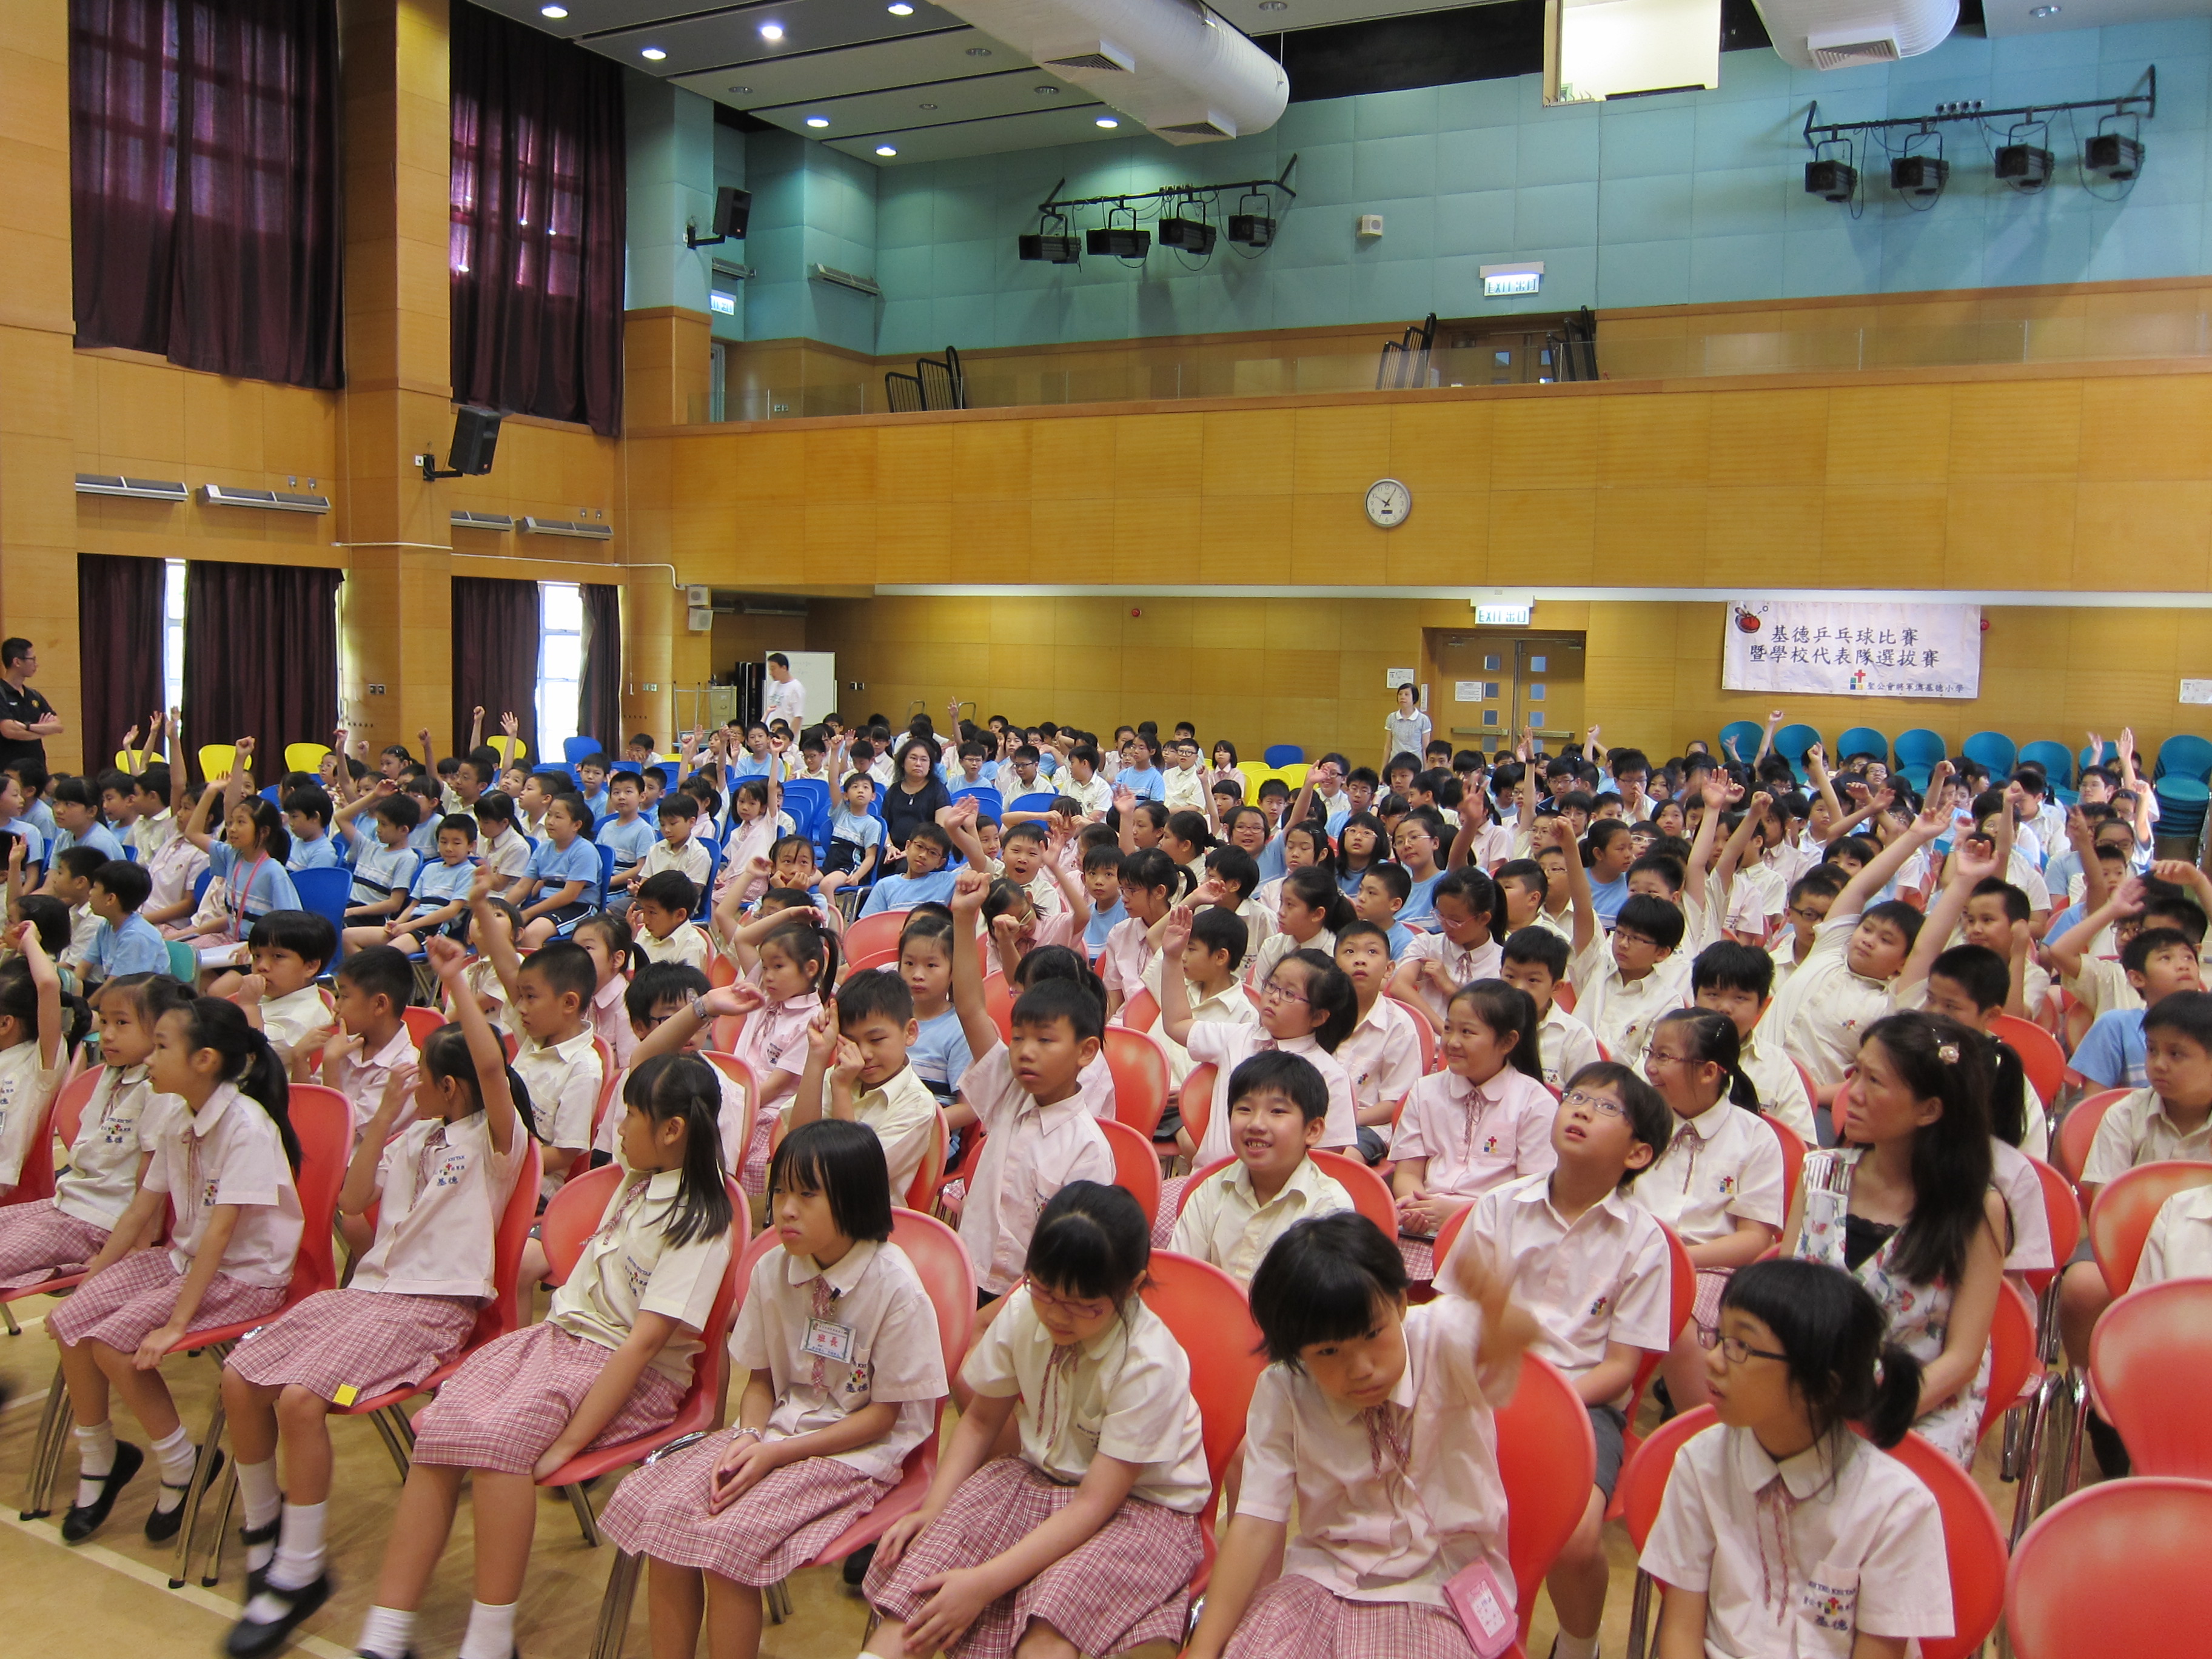 S.K.H. Tseung Kwan O Kei Tak Primary School